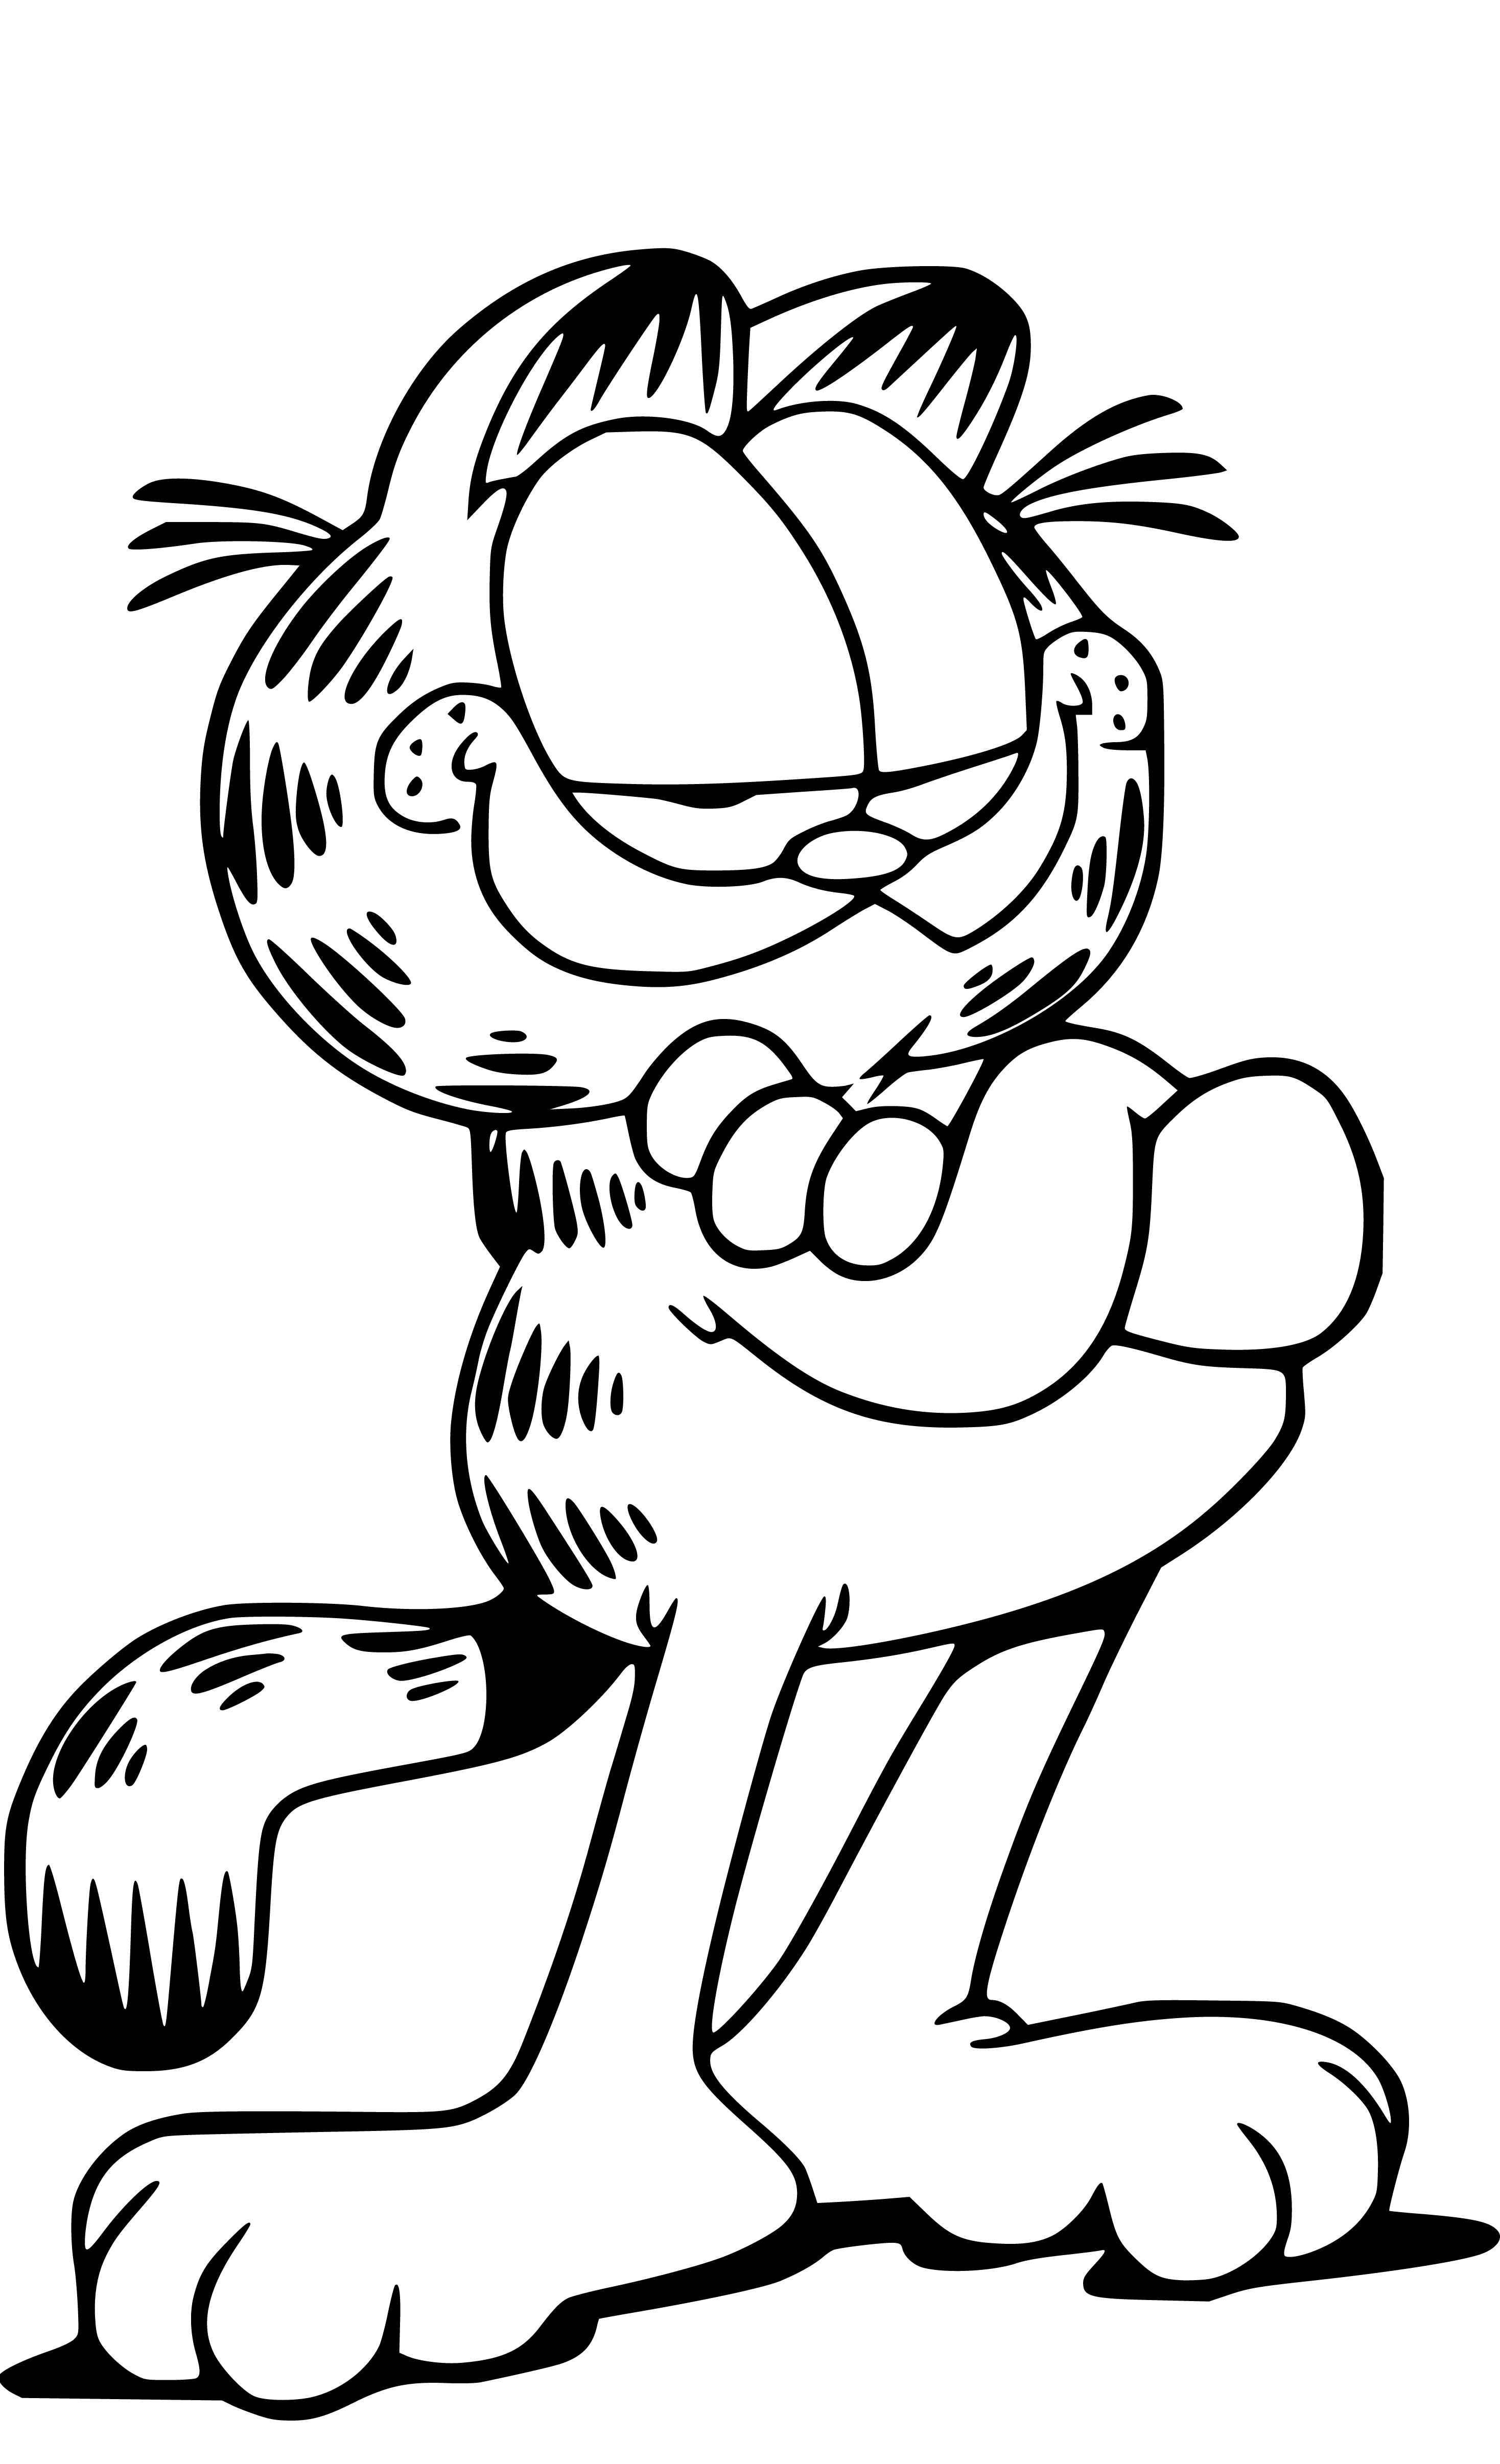 Simple Garfield Coloring Sheet - SheetalColor.com